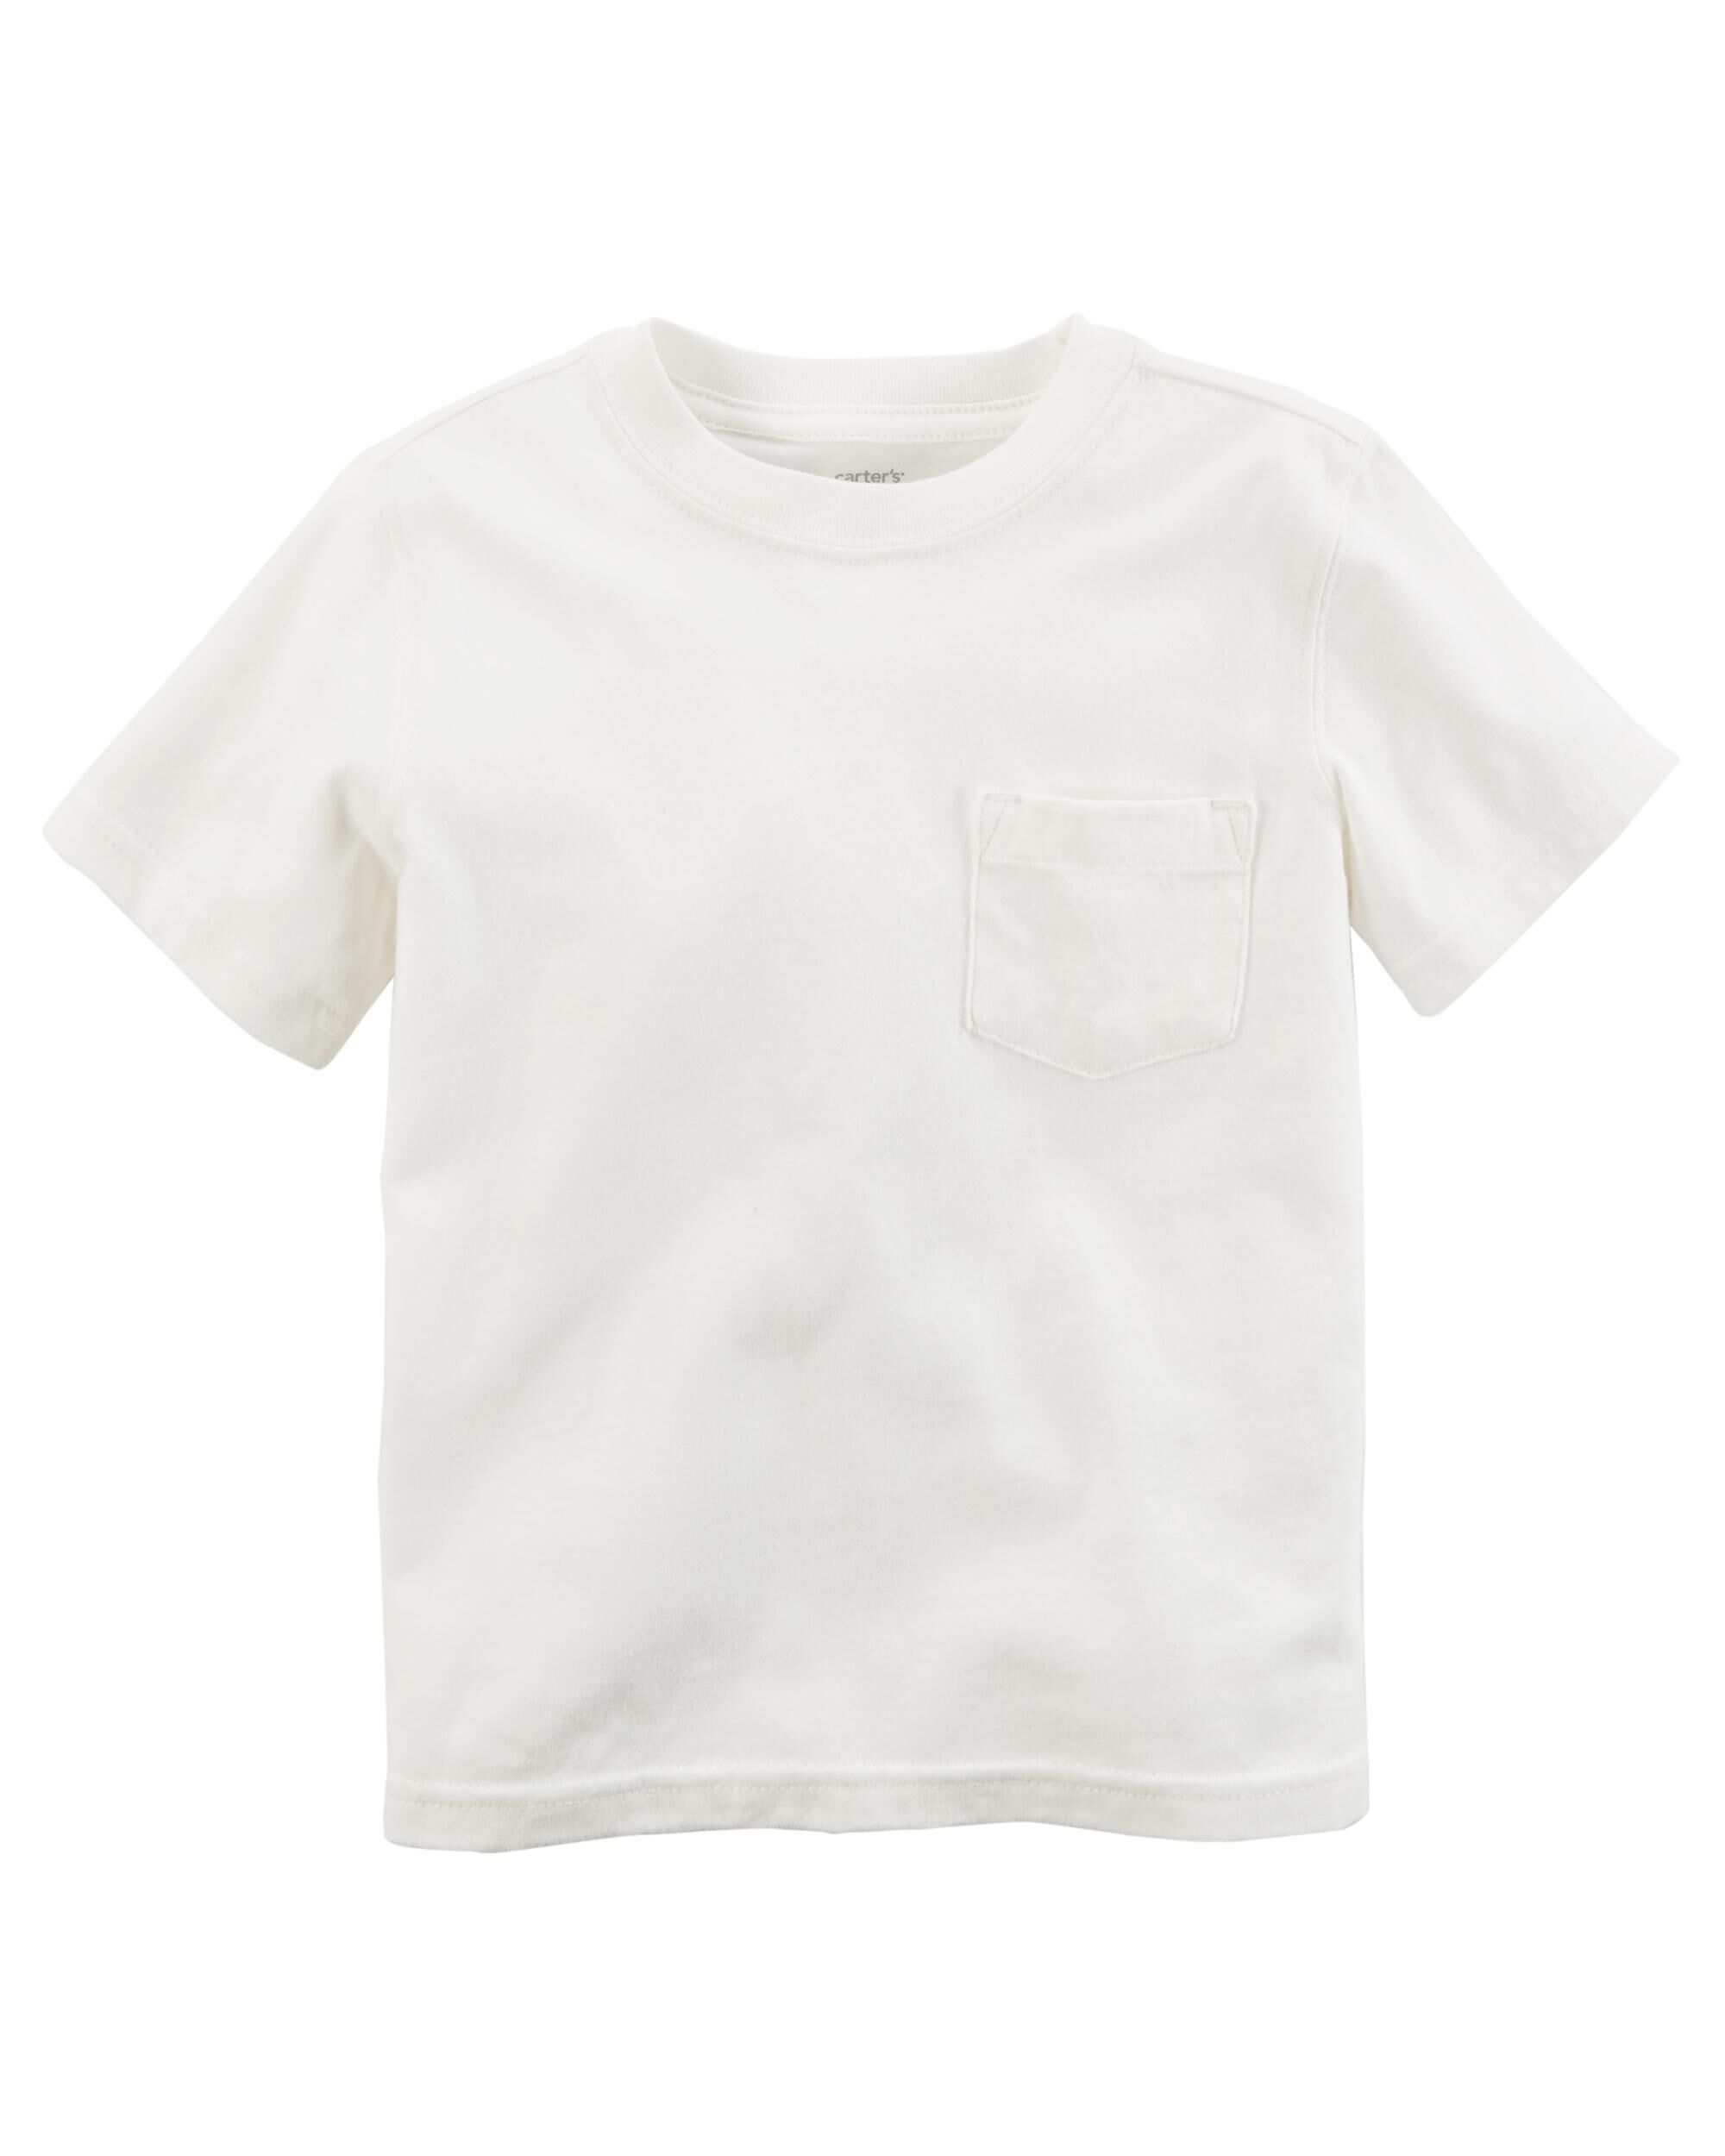 Kid White Pocket Jersey Tee | carters.com